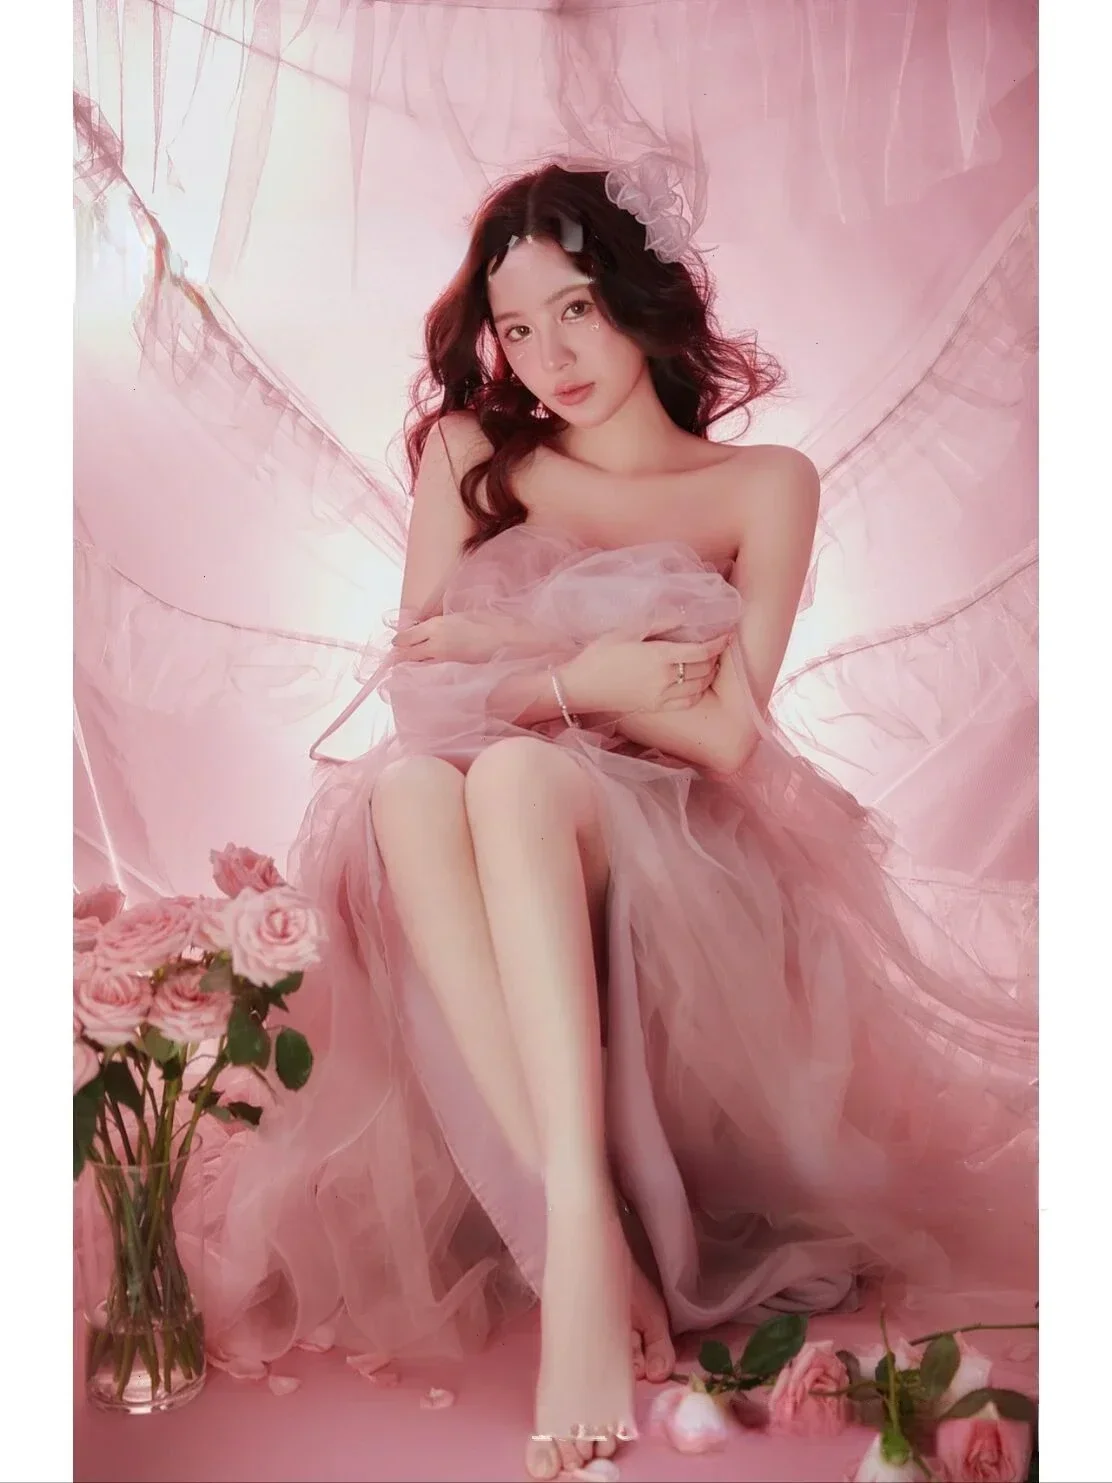 

Studio Wedding Theme Costume Fantasy Forest Elf Goddess Pink Yarn Skirt Realistic Private Art Photography Clothing